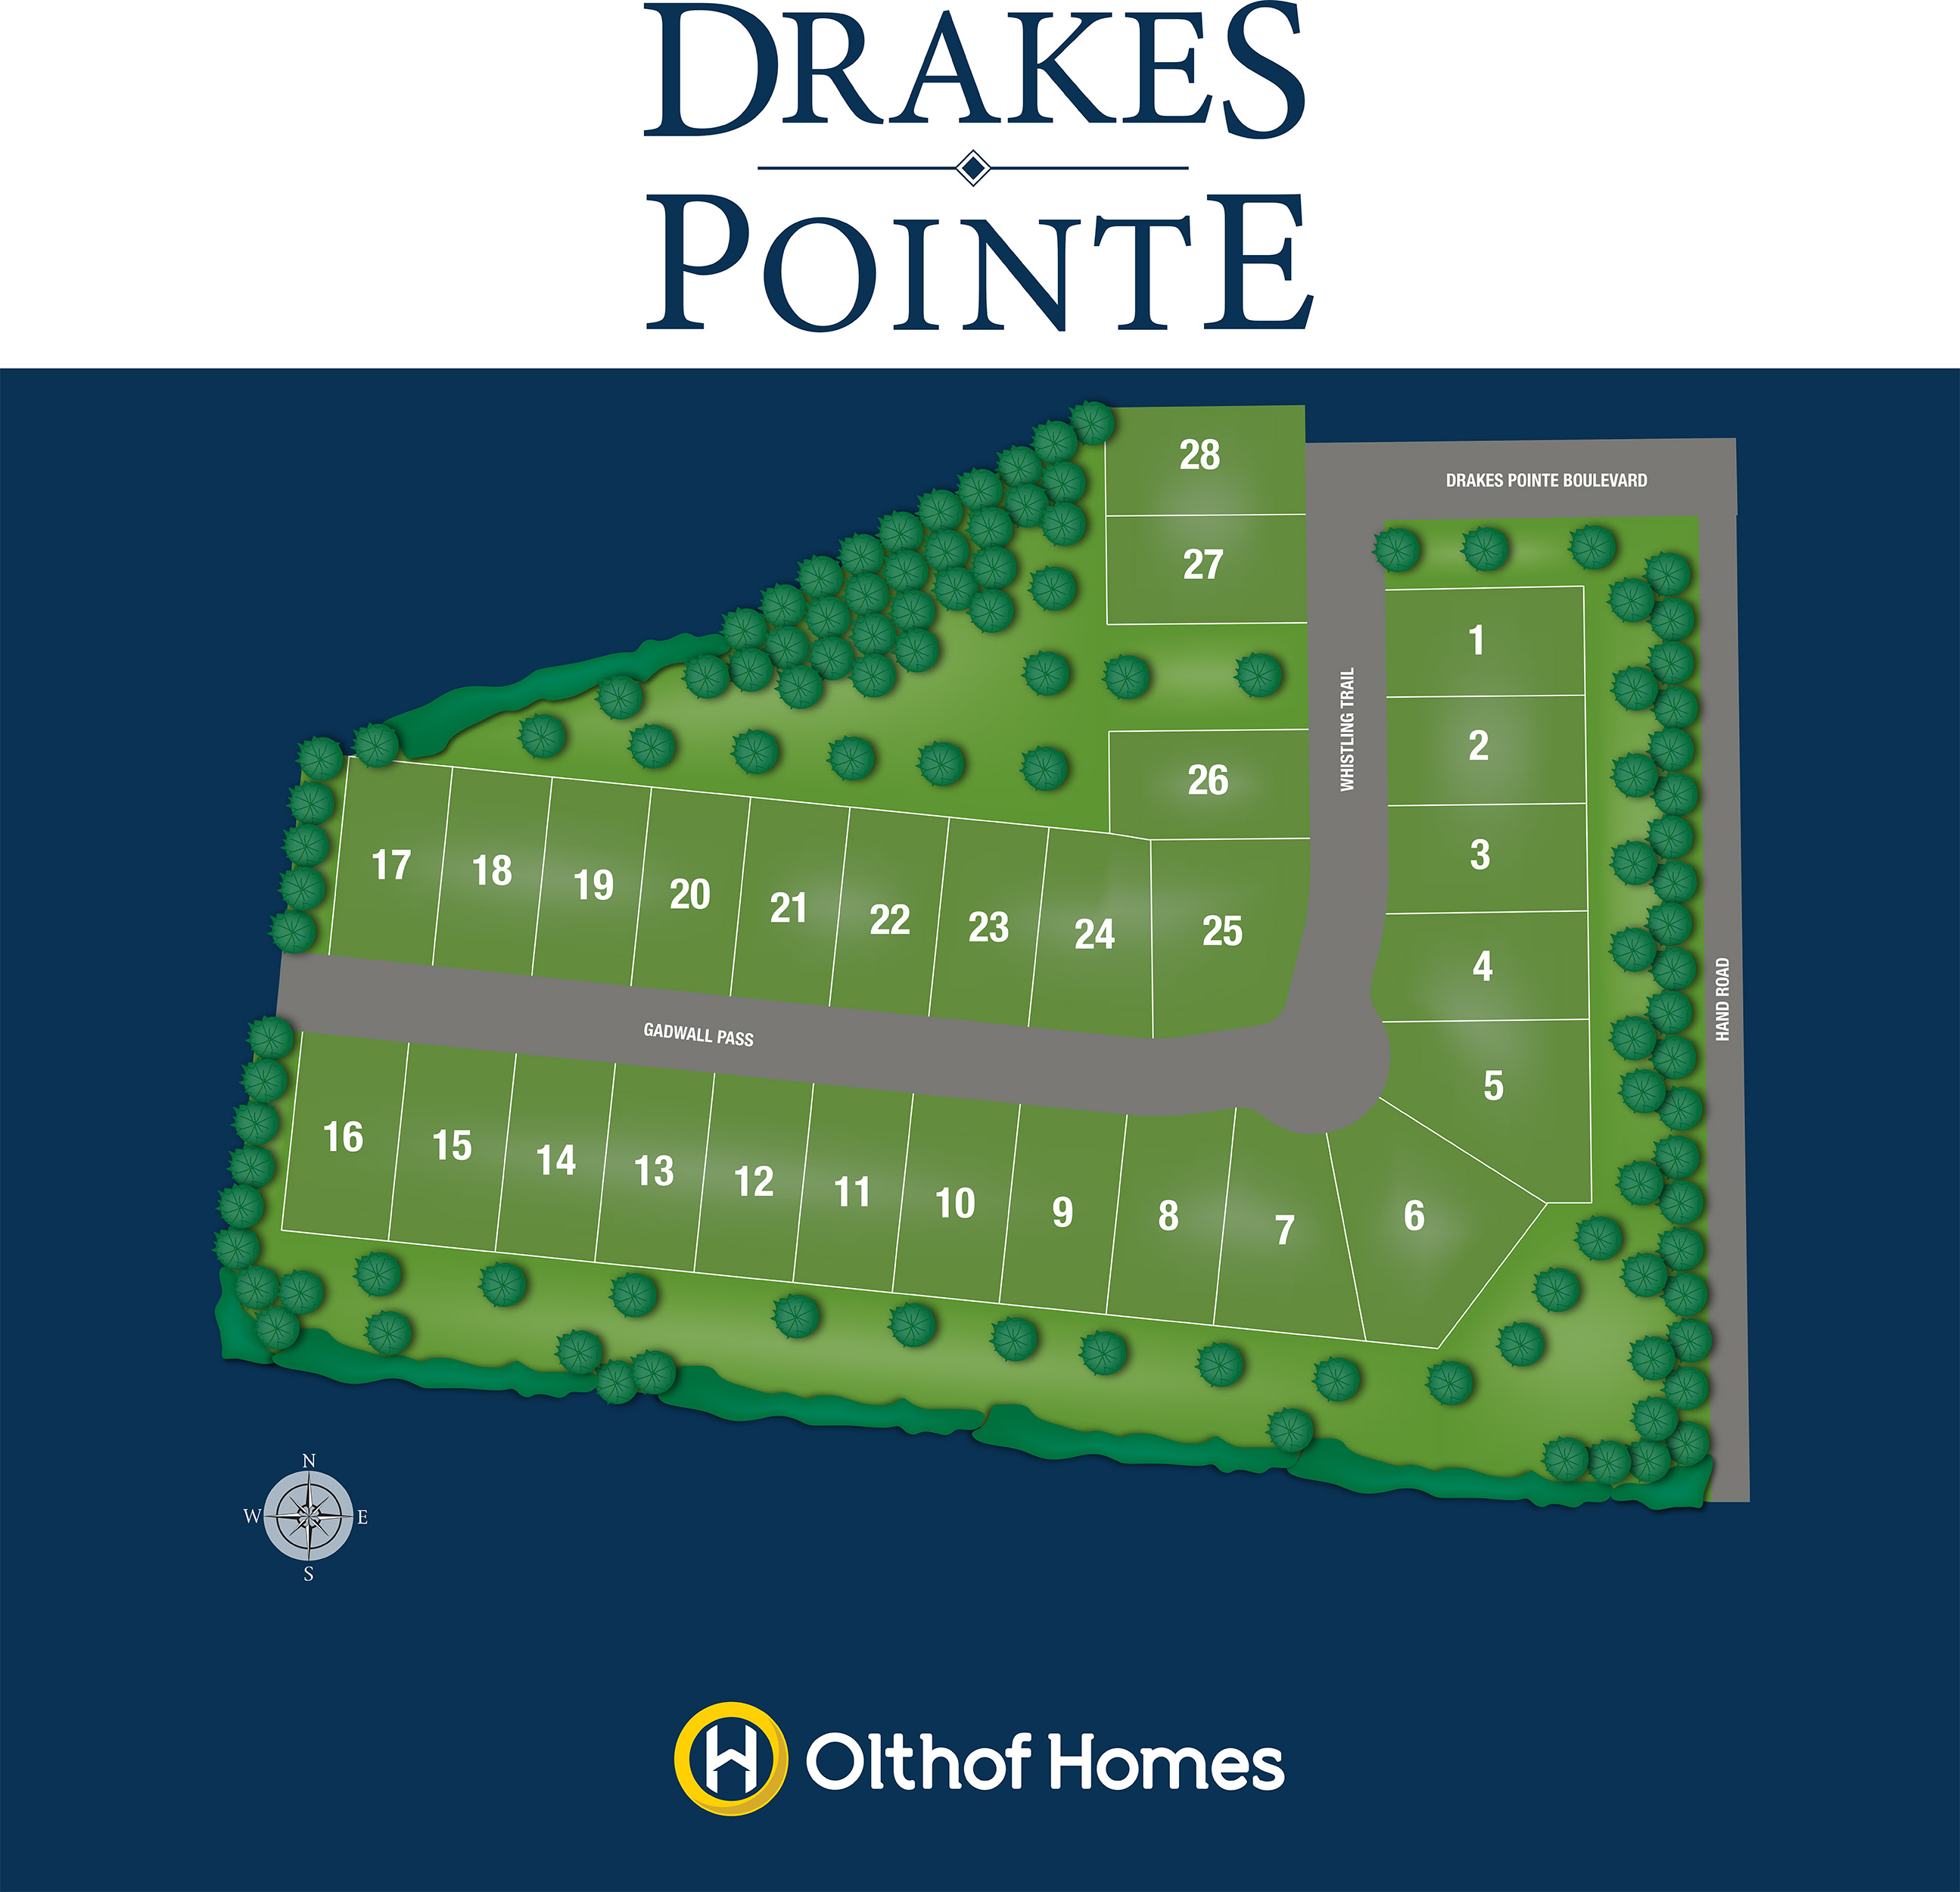 VIA Marketing Plat & Site Illustration  Olthof Homes Subdivision Community Drakes Pointe